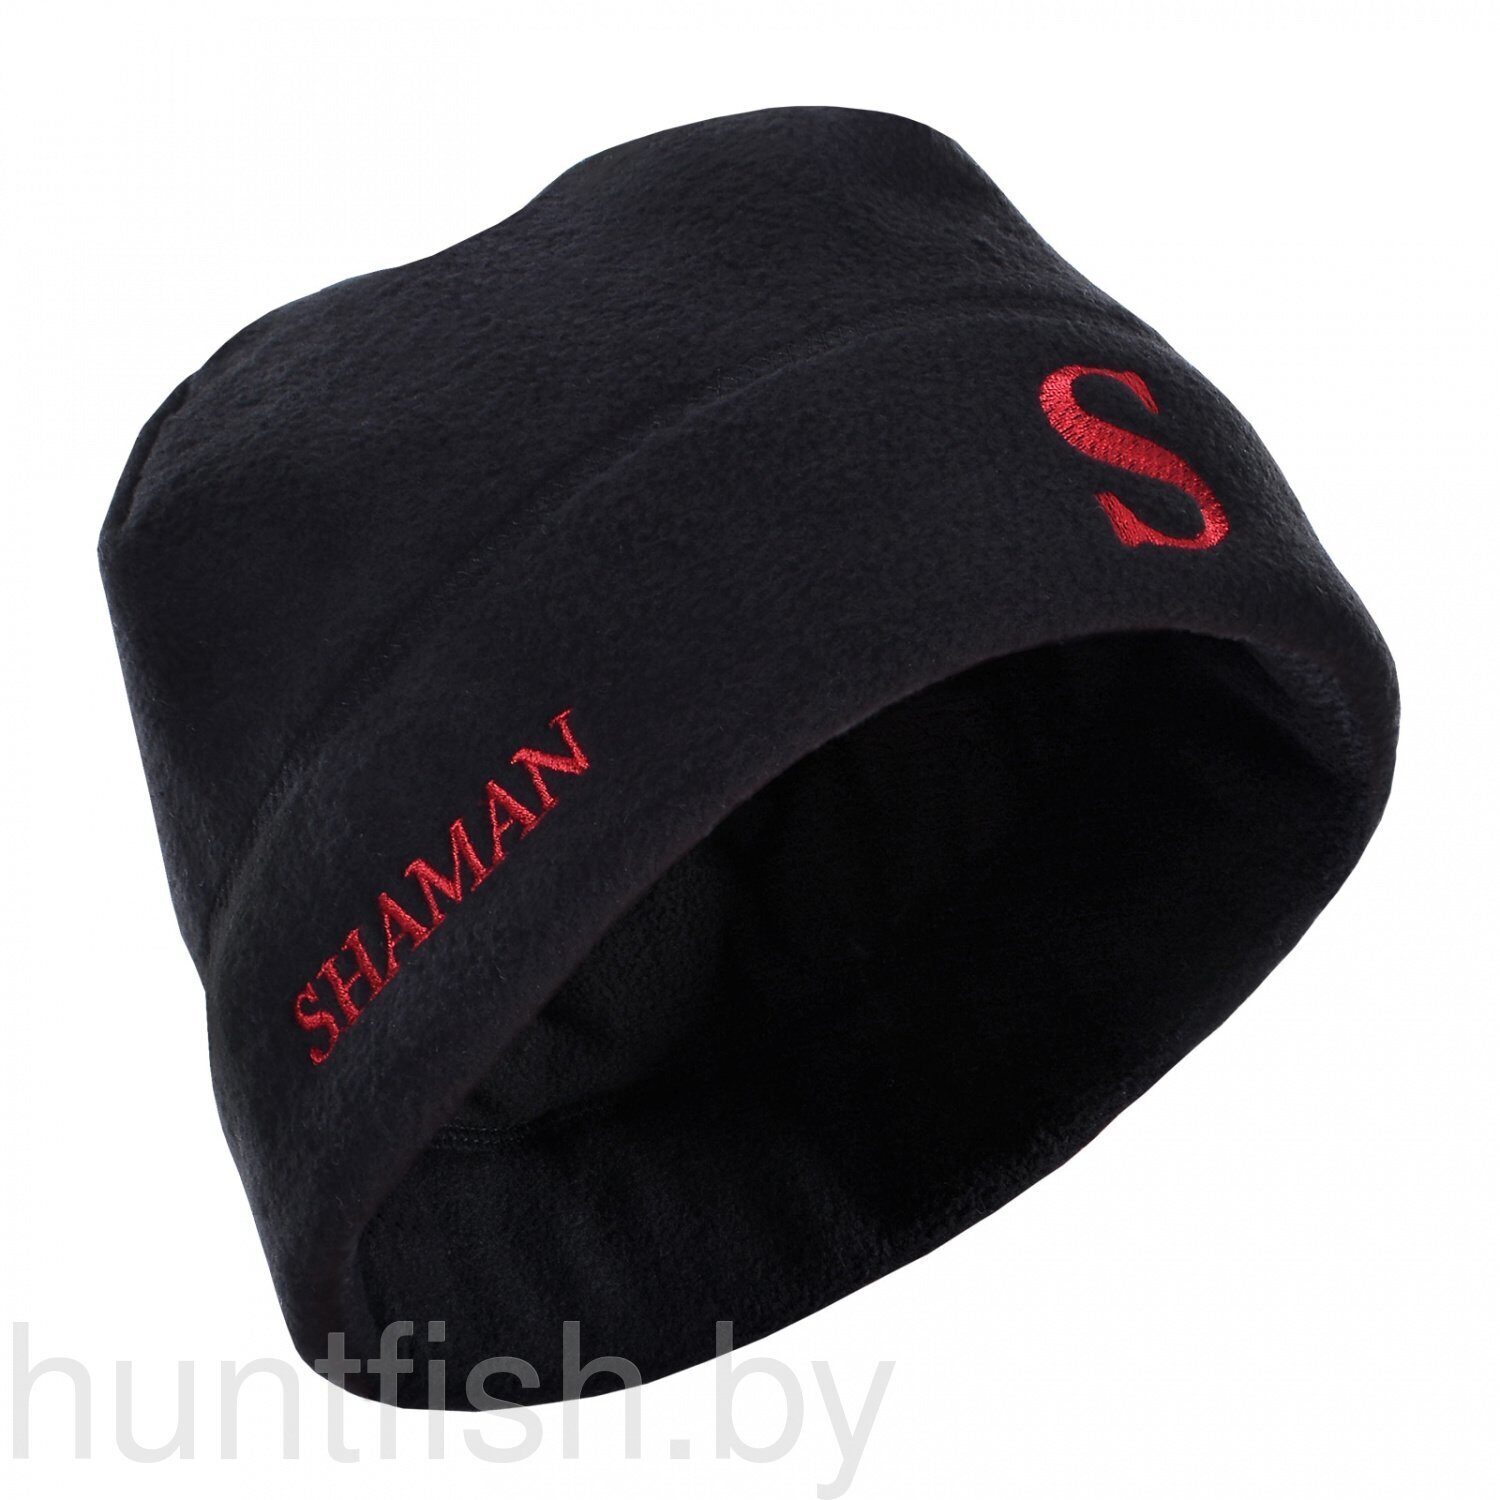 Шапка мужская зимняя  SHAMAN-280 флис, черная (красная вышивка)